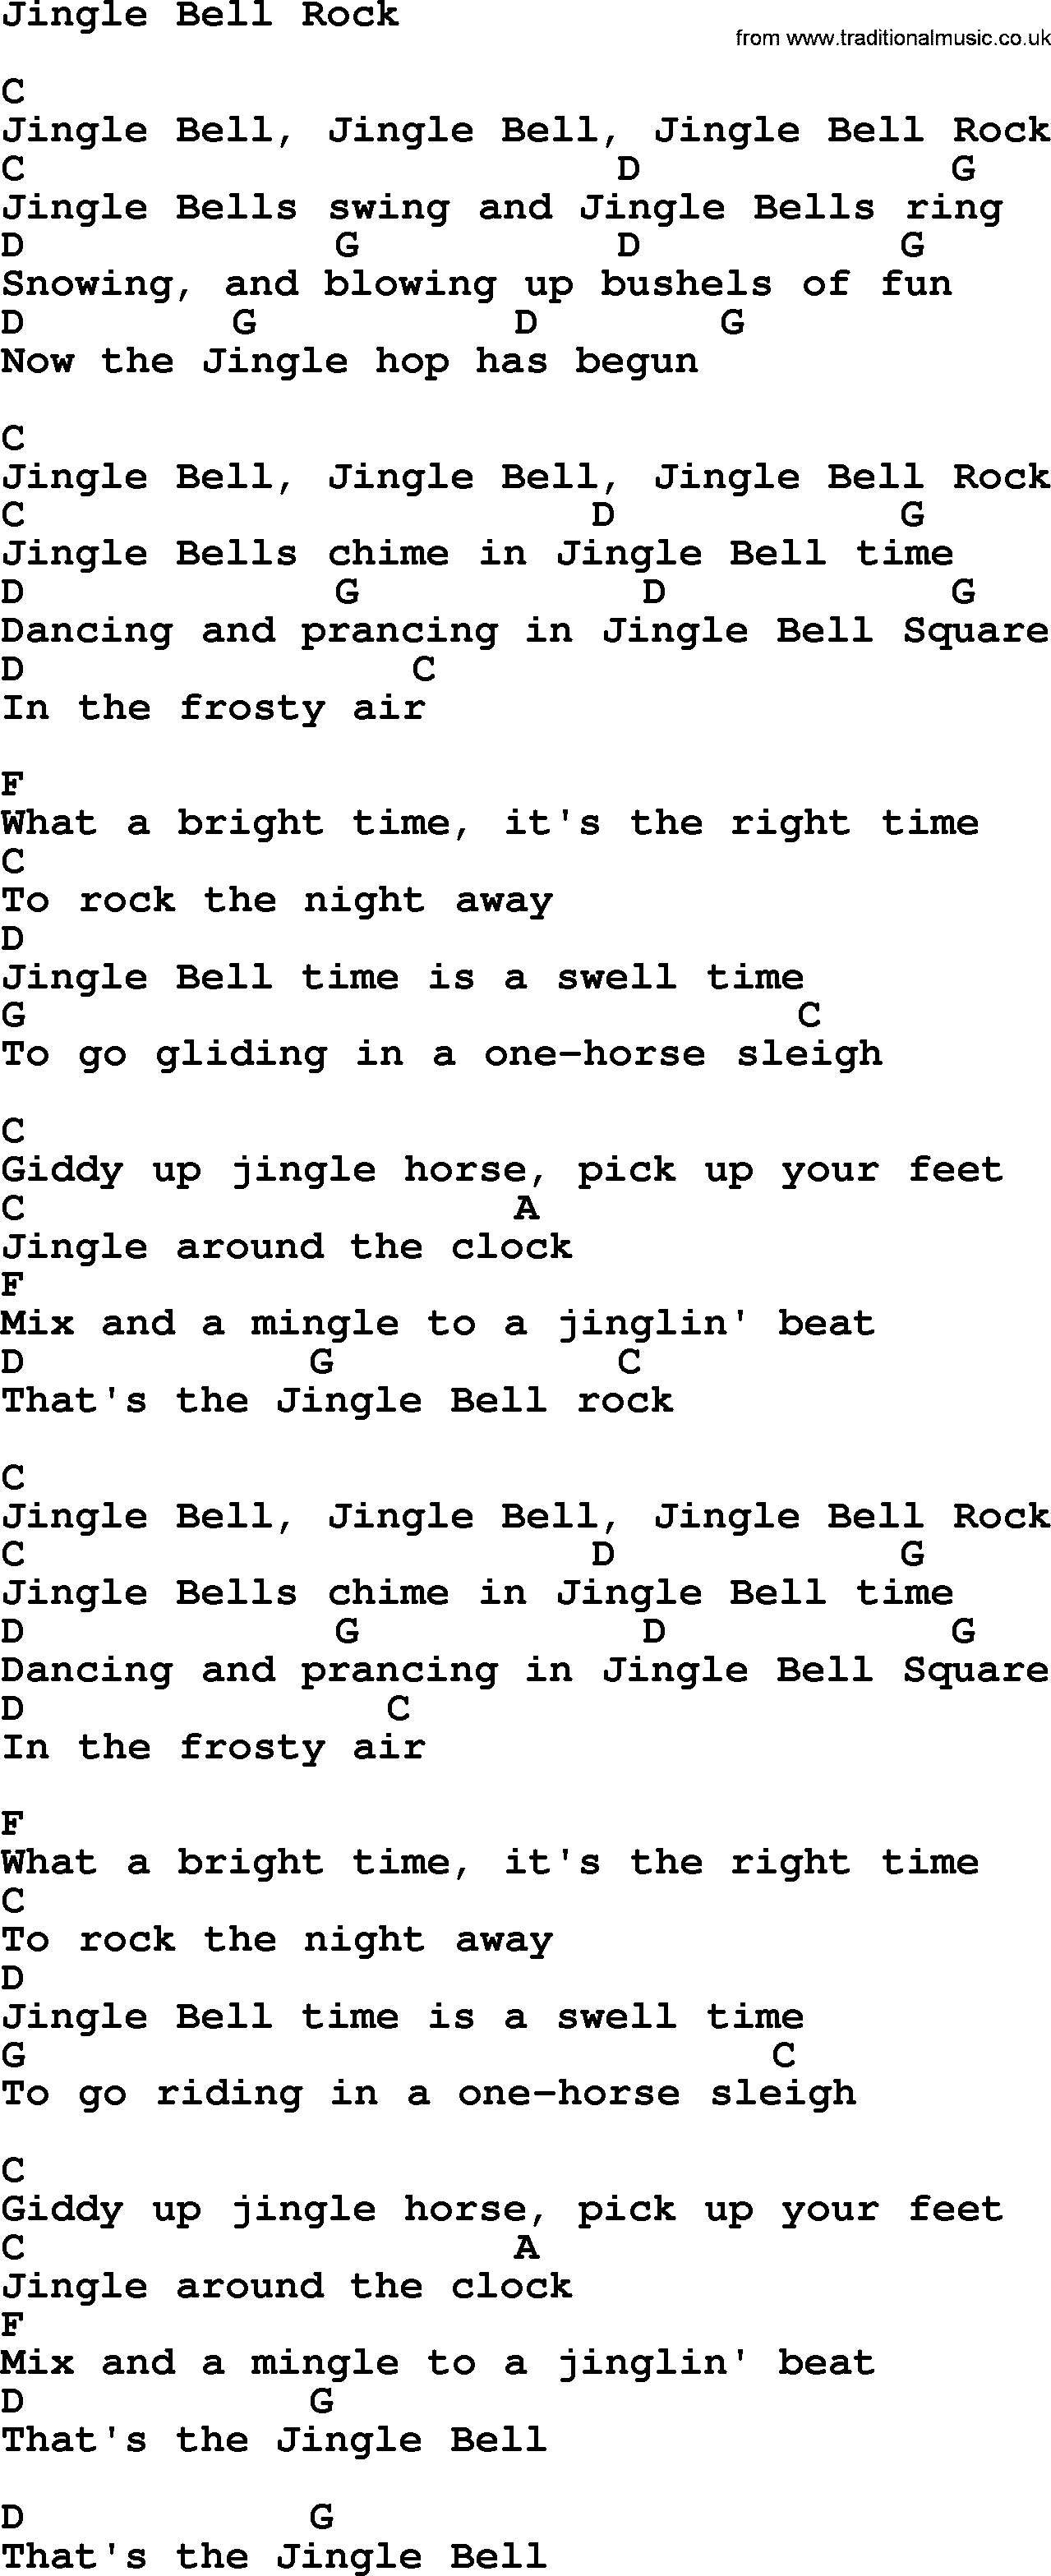 Jingle Bell Rock Chords Jingle Bell Rock George Strait Lyrics And Chords